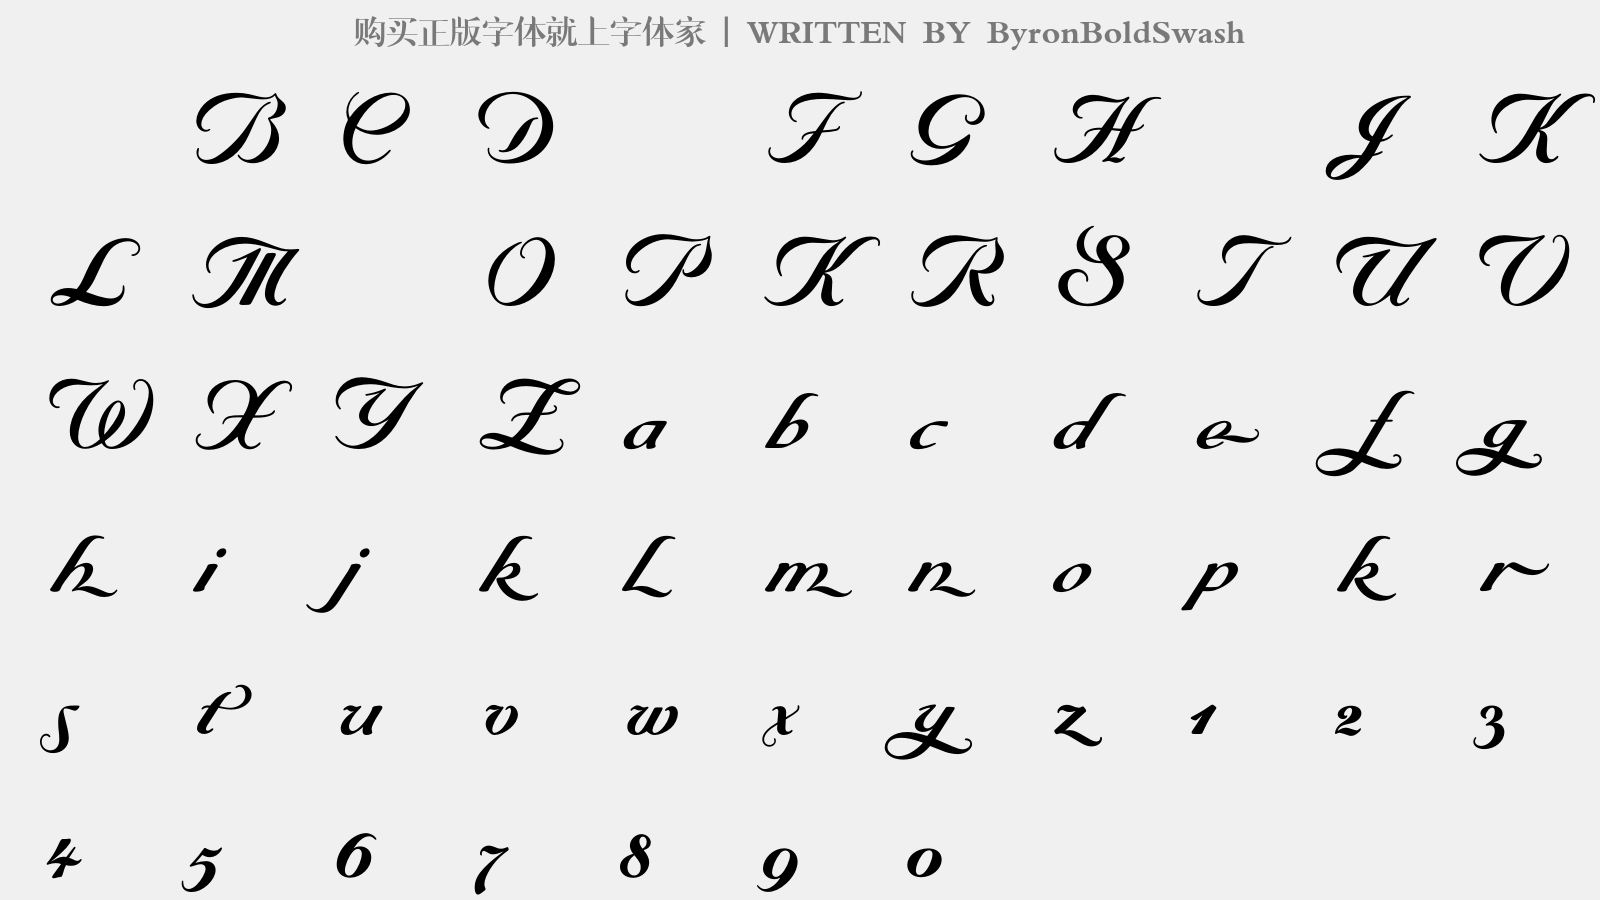 ByronBoldSwash - 大写字母/小写字母/数字